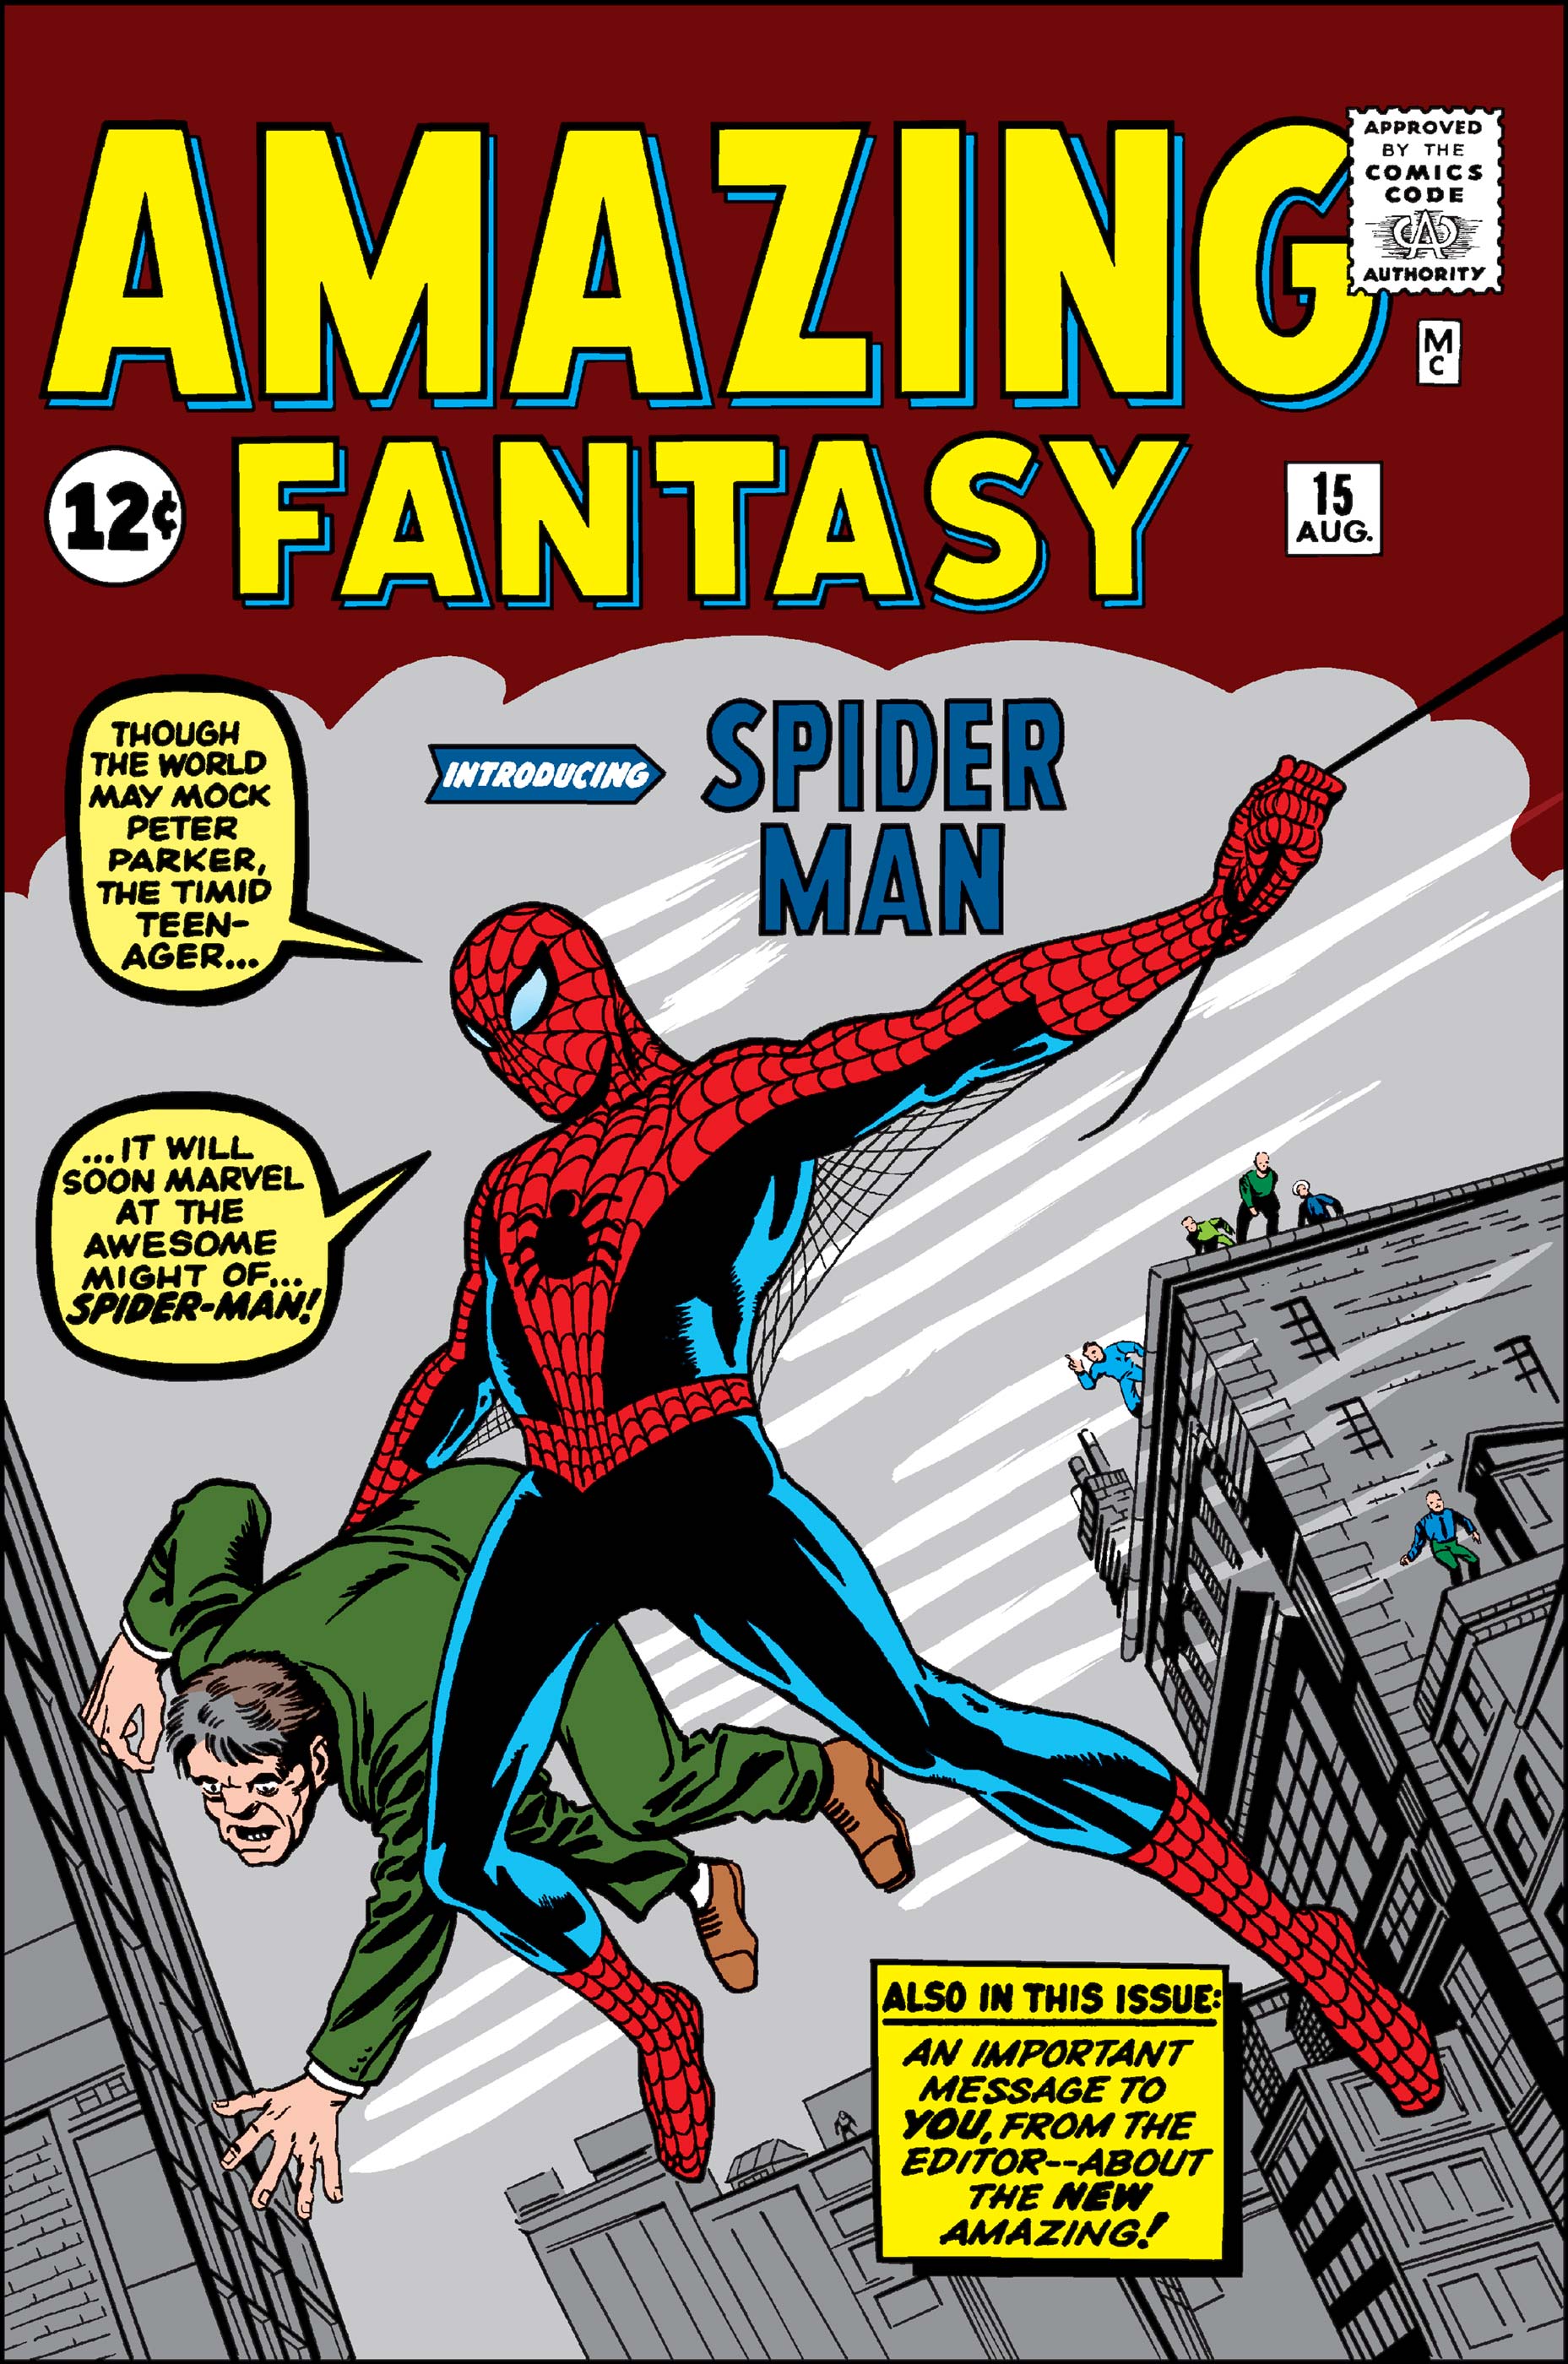 Amazing Fantasy (1962) #15 | Comic Issues | Marvel